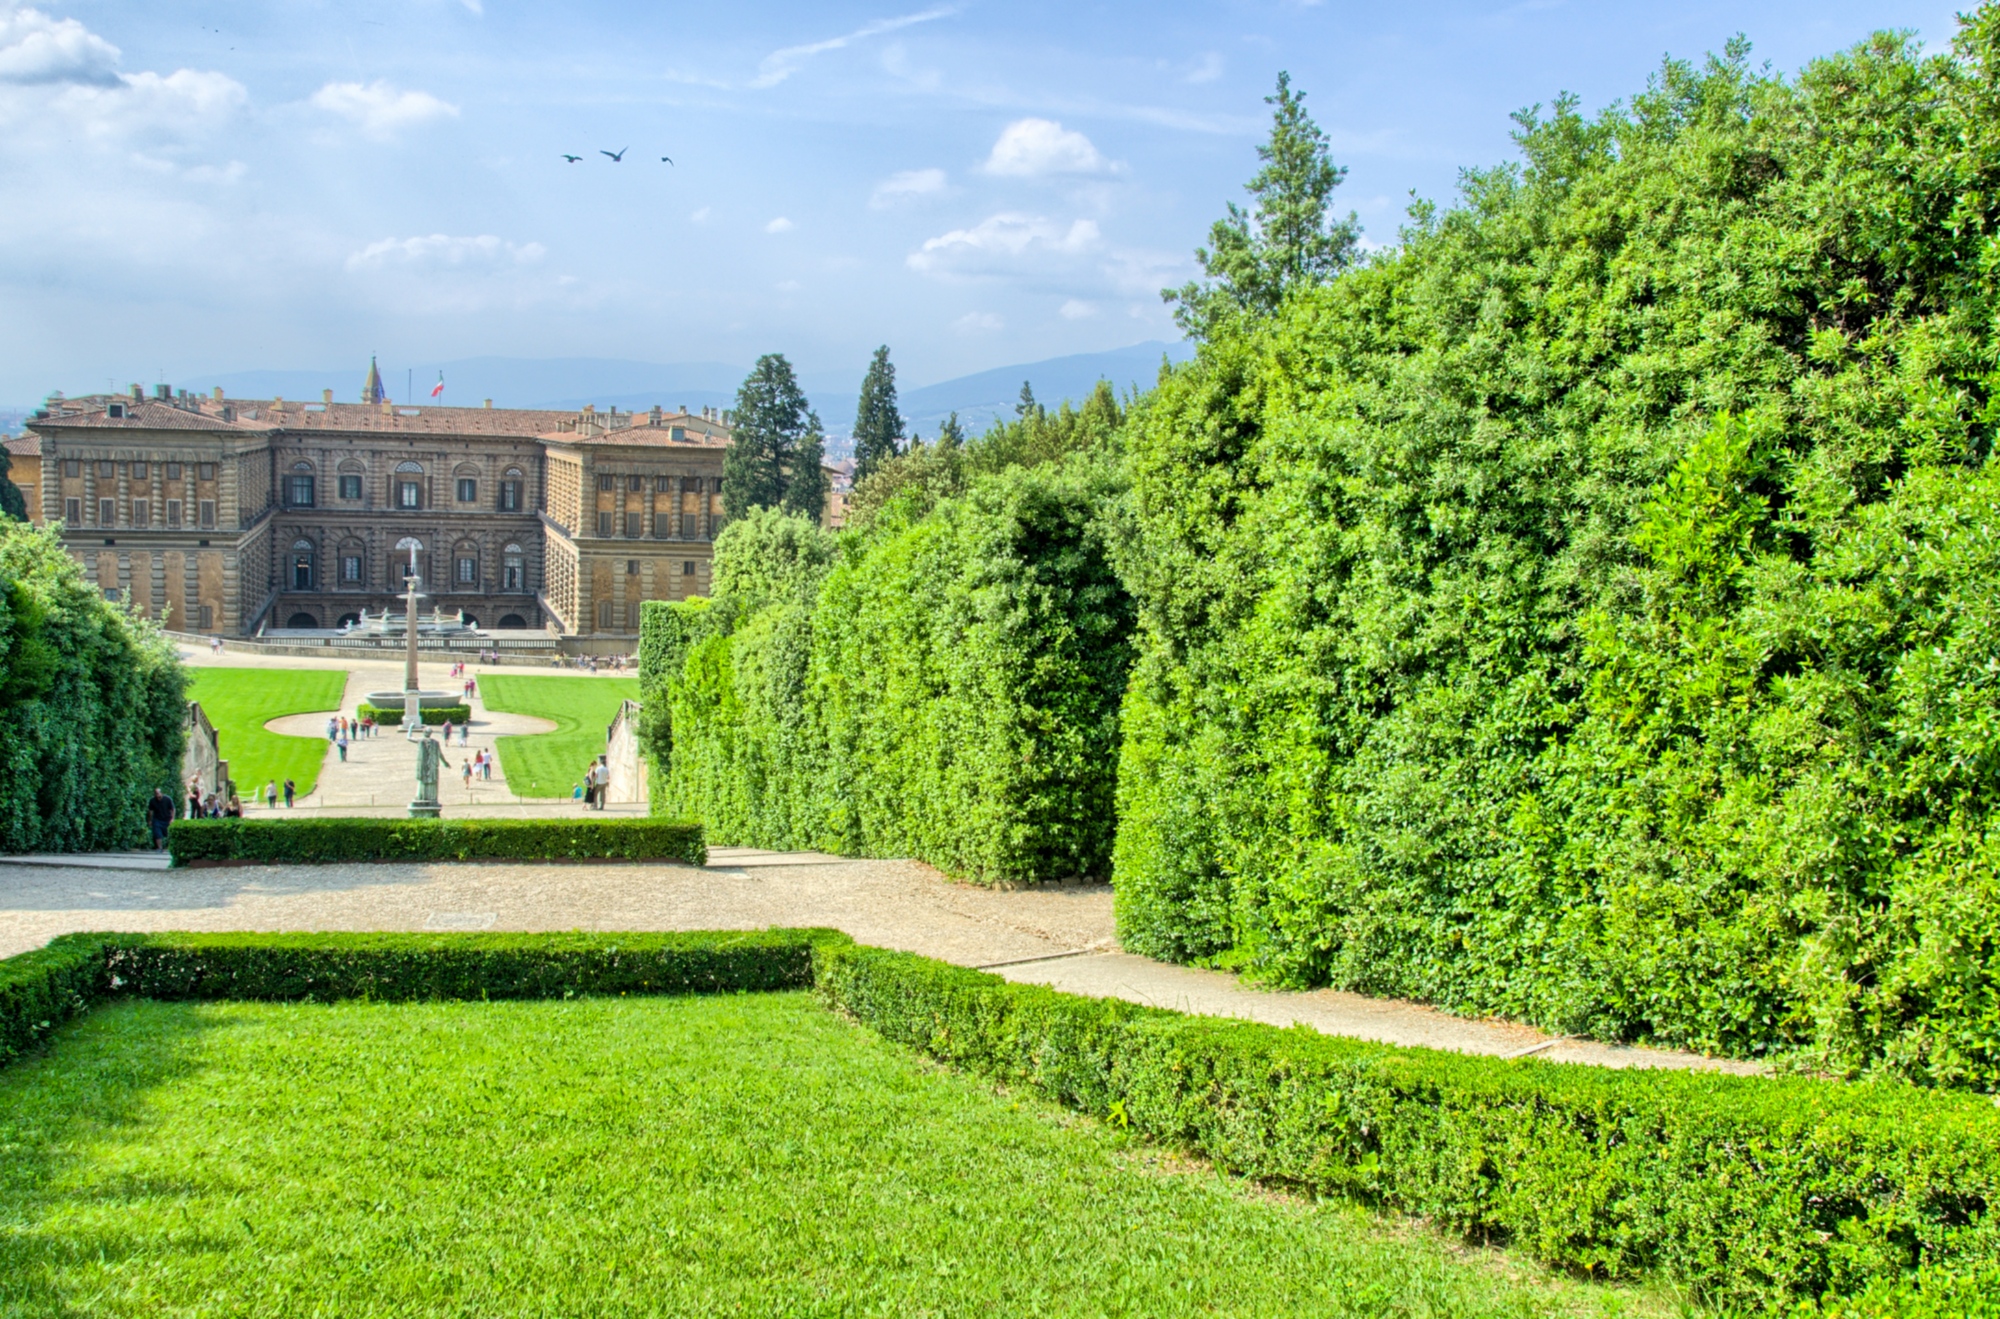 Giardino di Boboli, Florencia